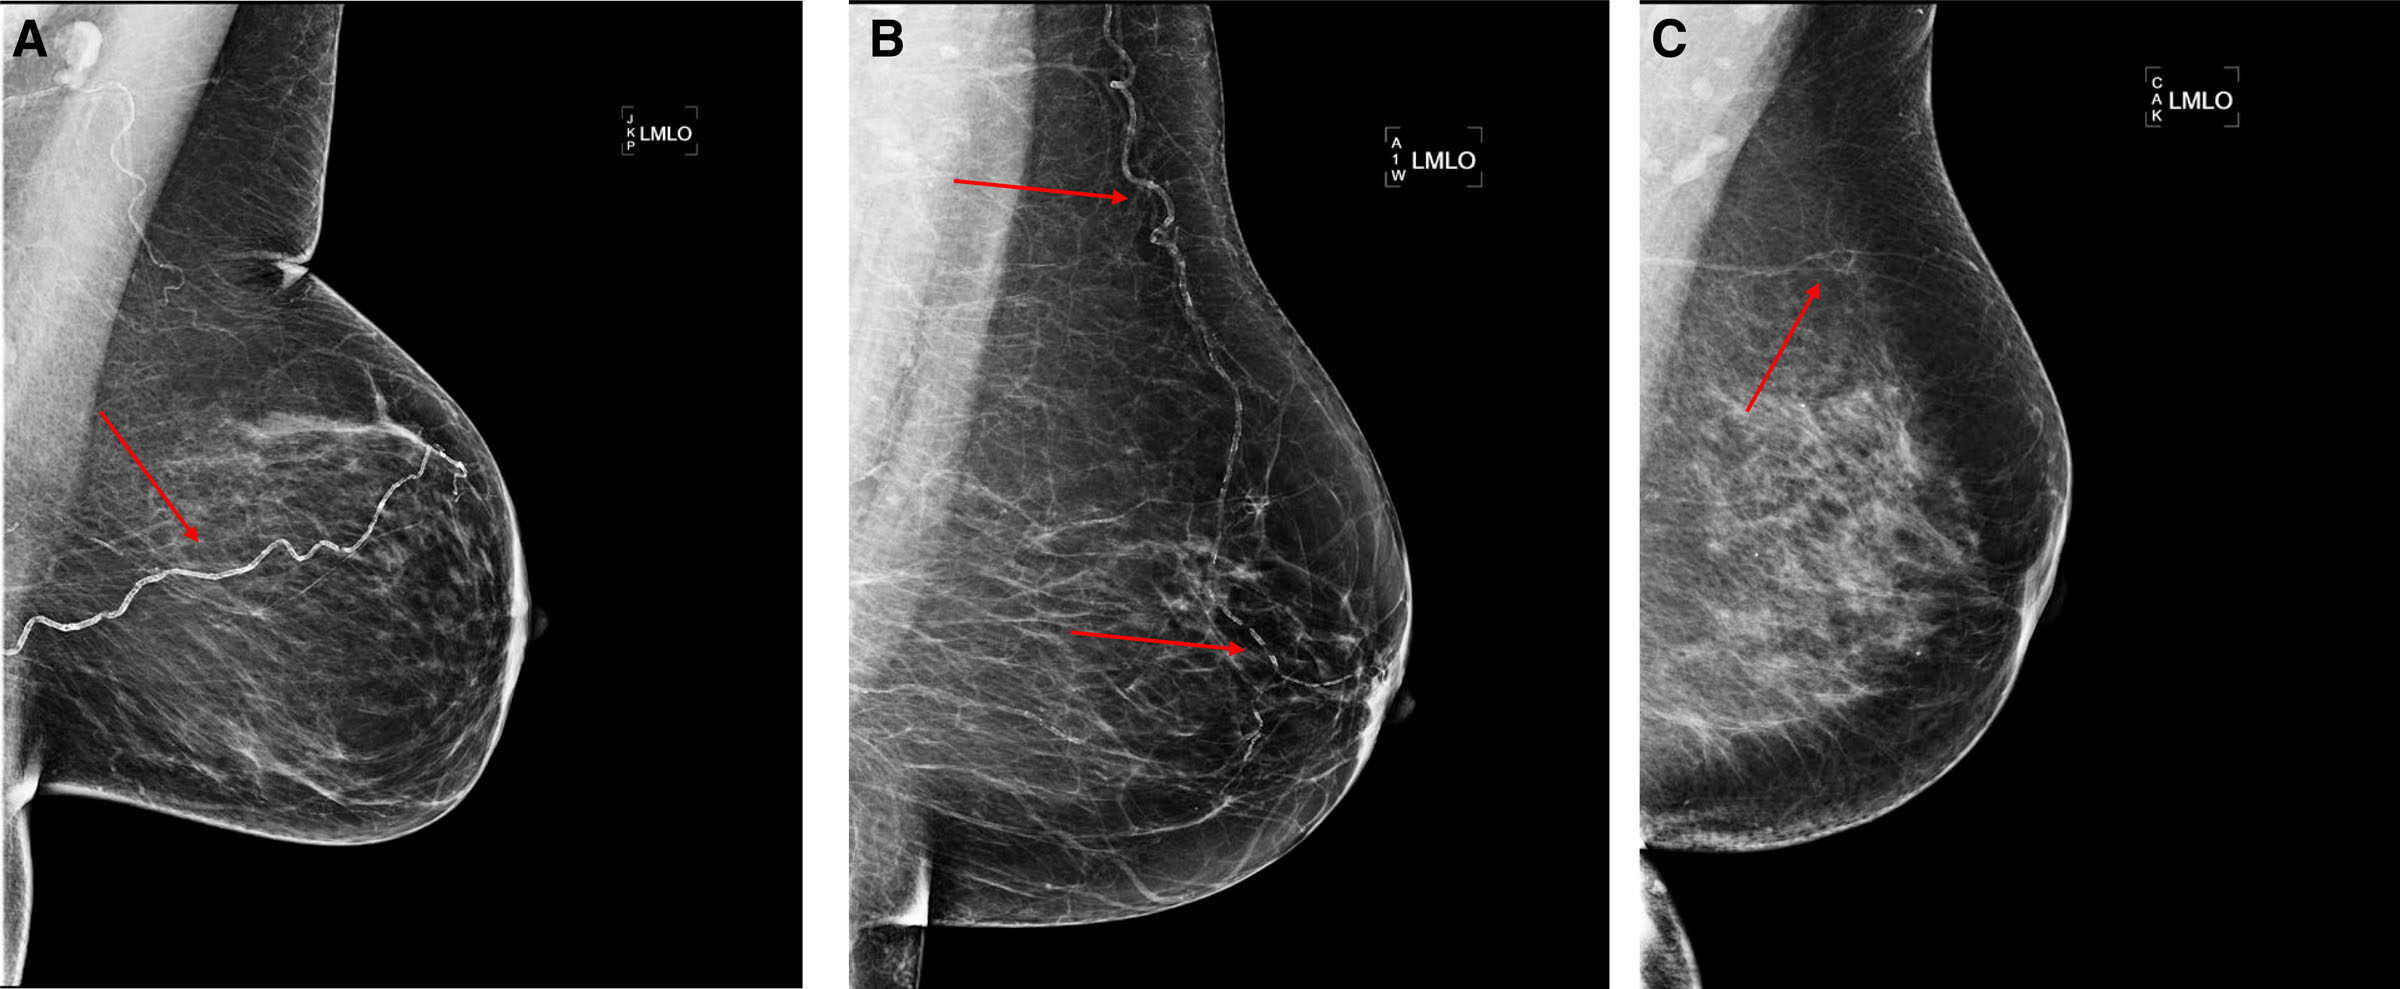 Kalcifikacija arterija dojke (BAC) često se vidi na mamografijama